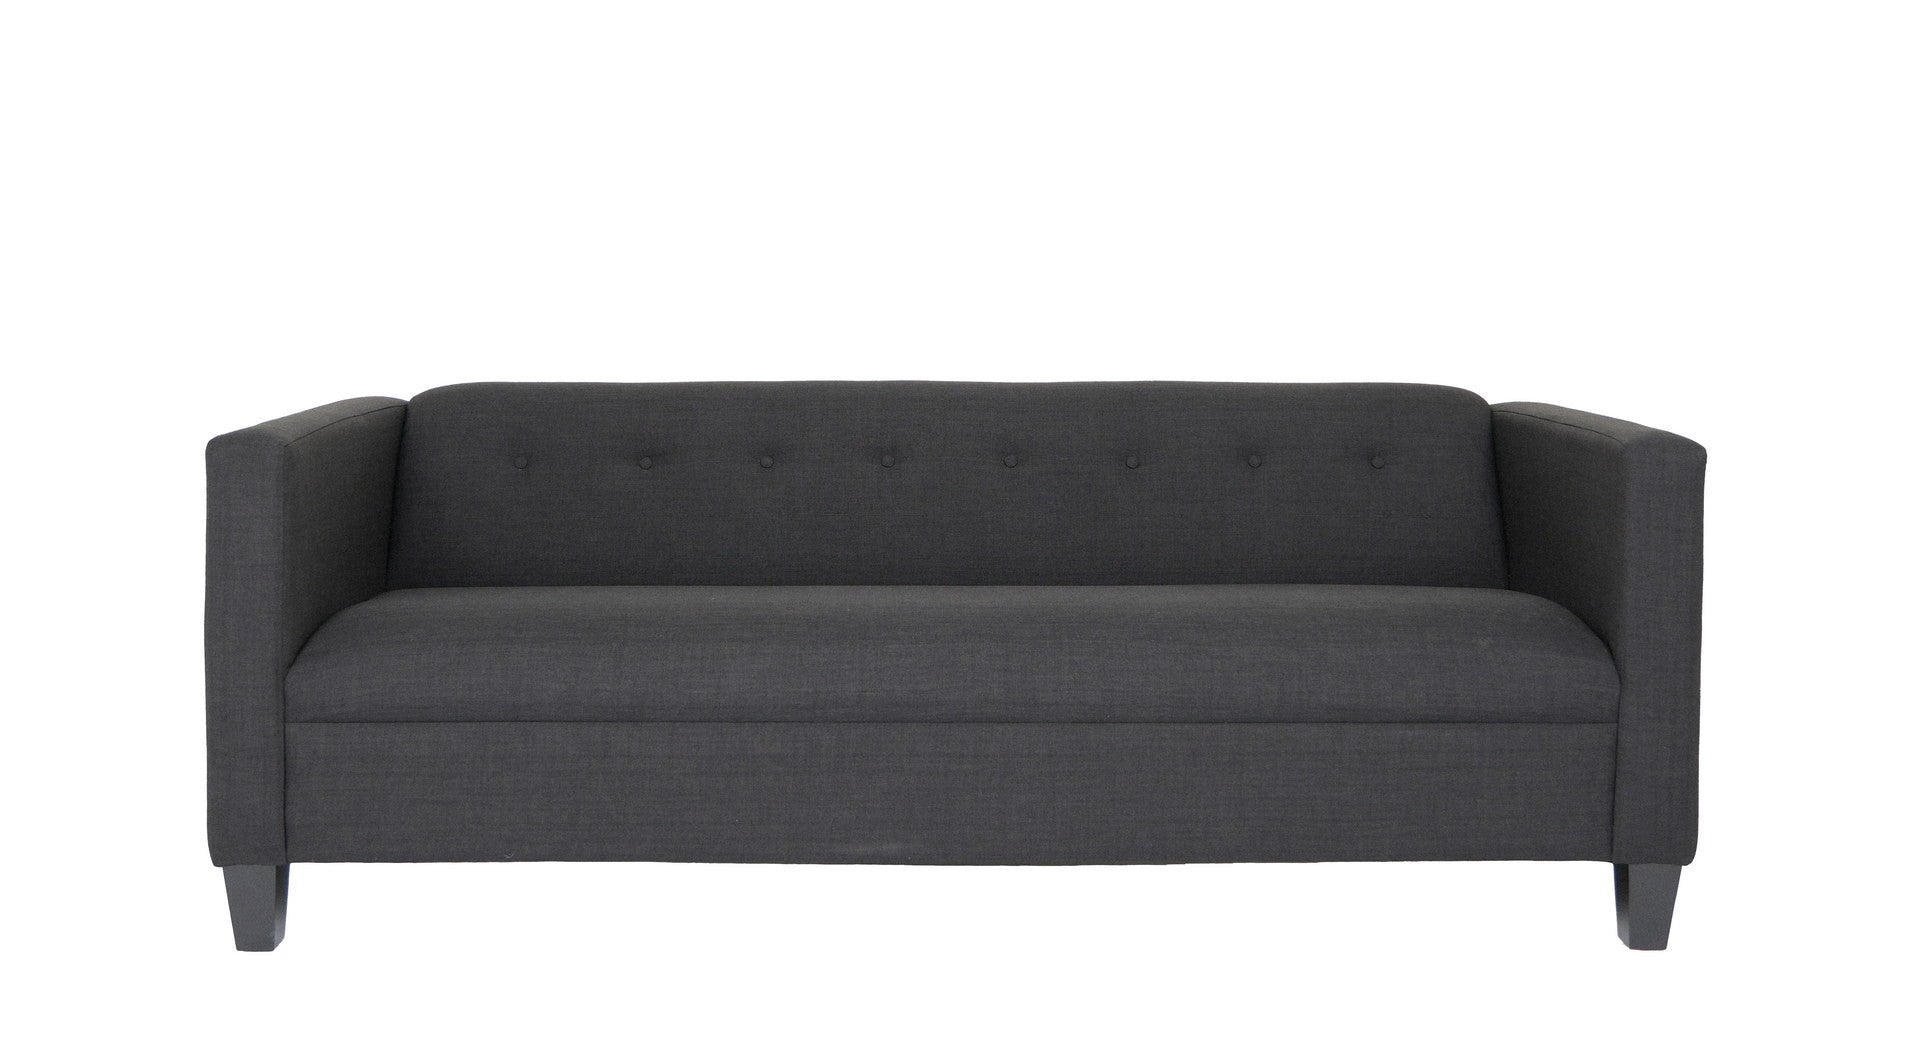 80" Black Polyester Sofa